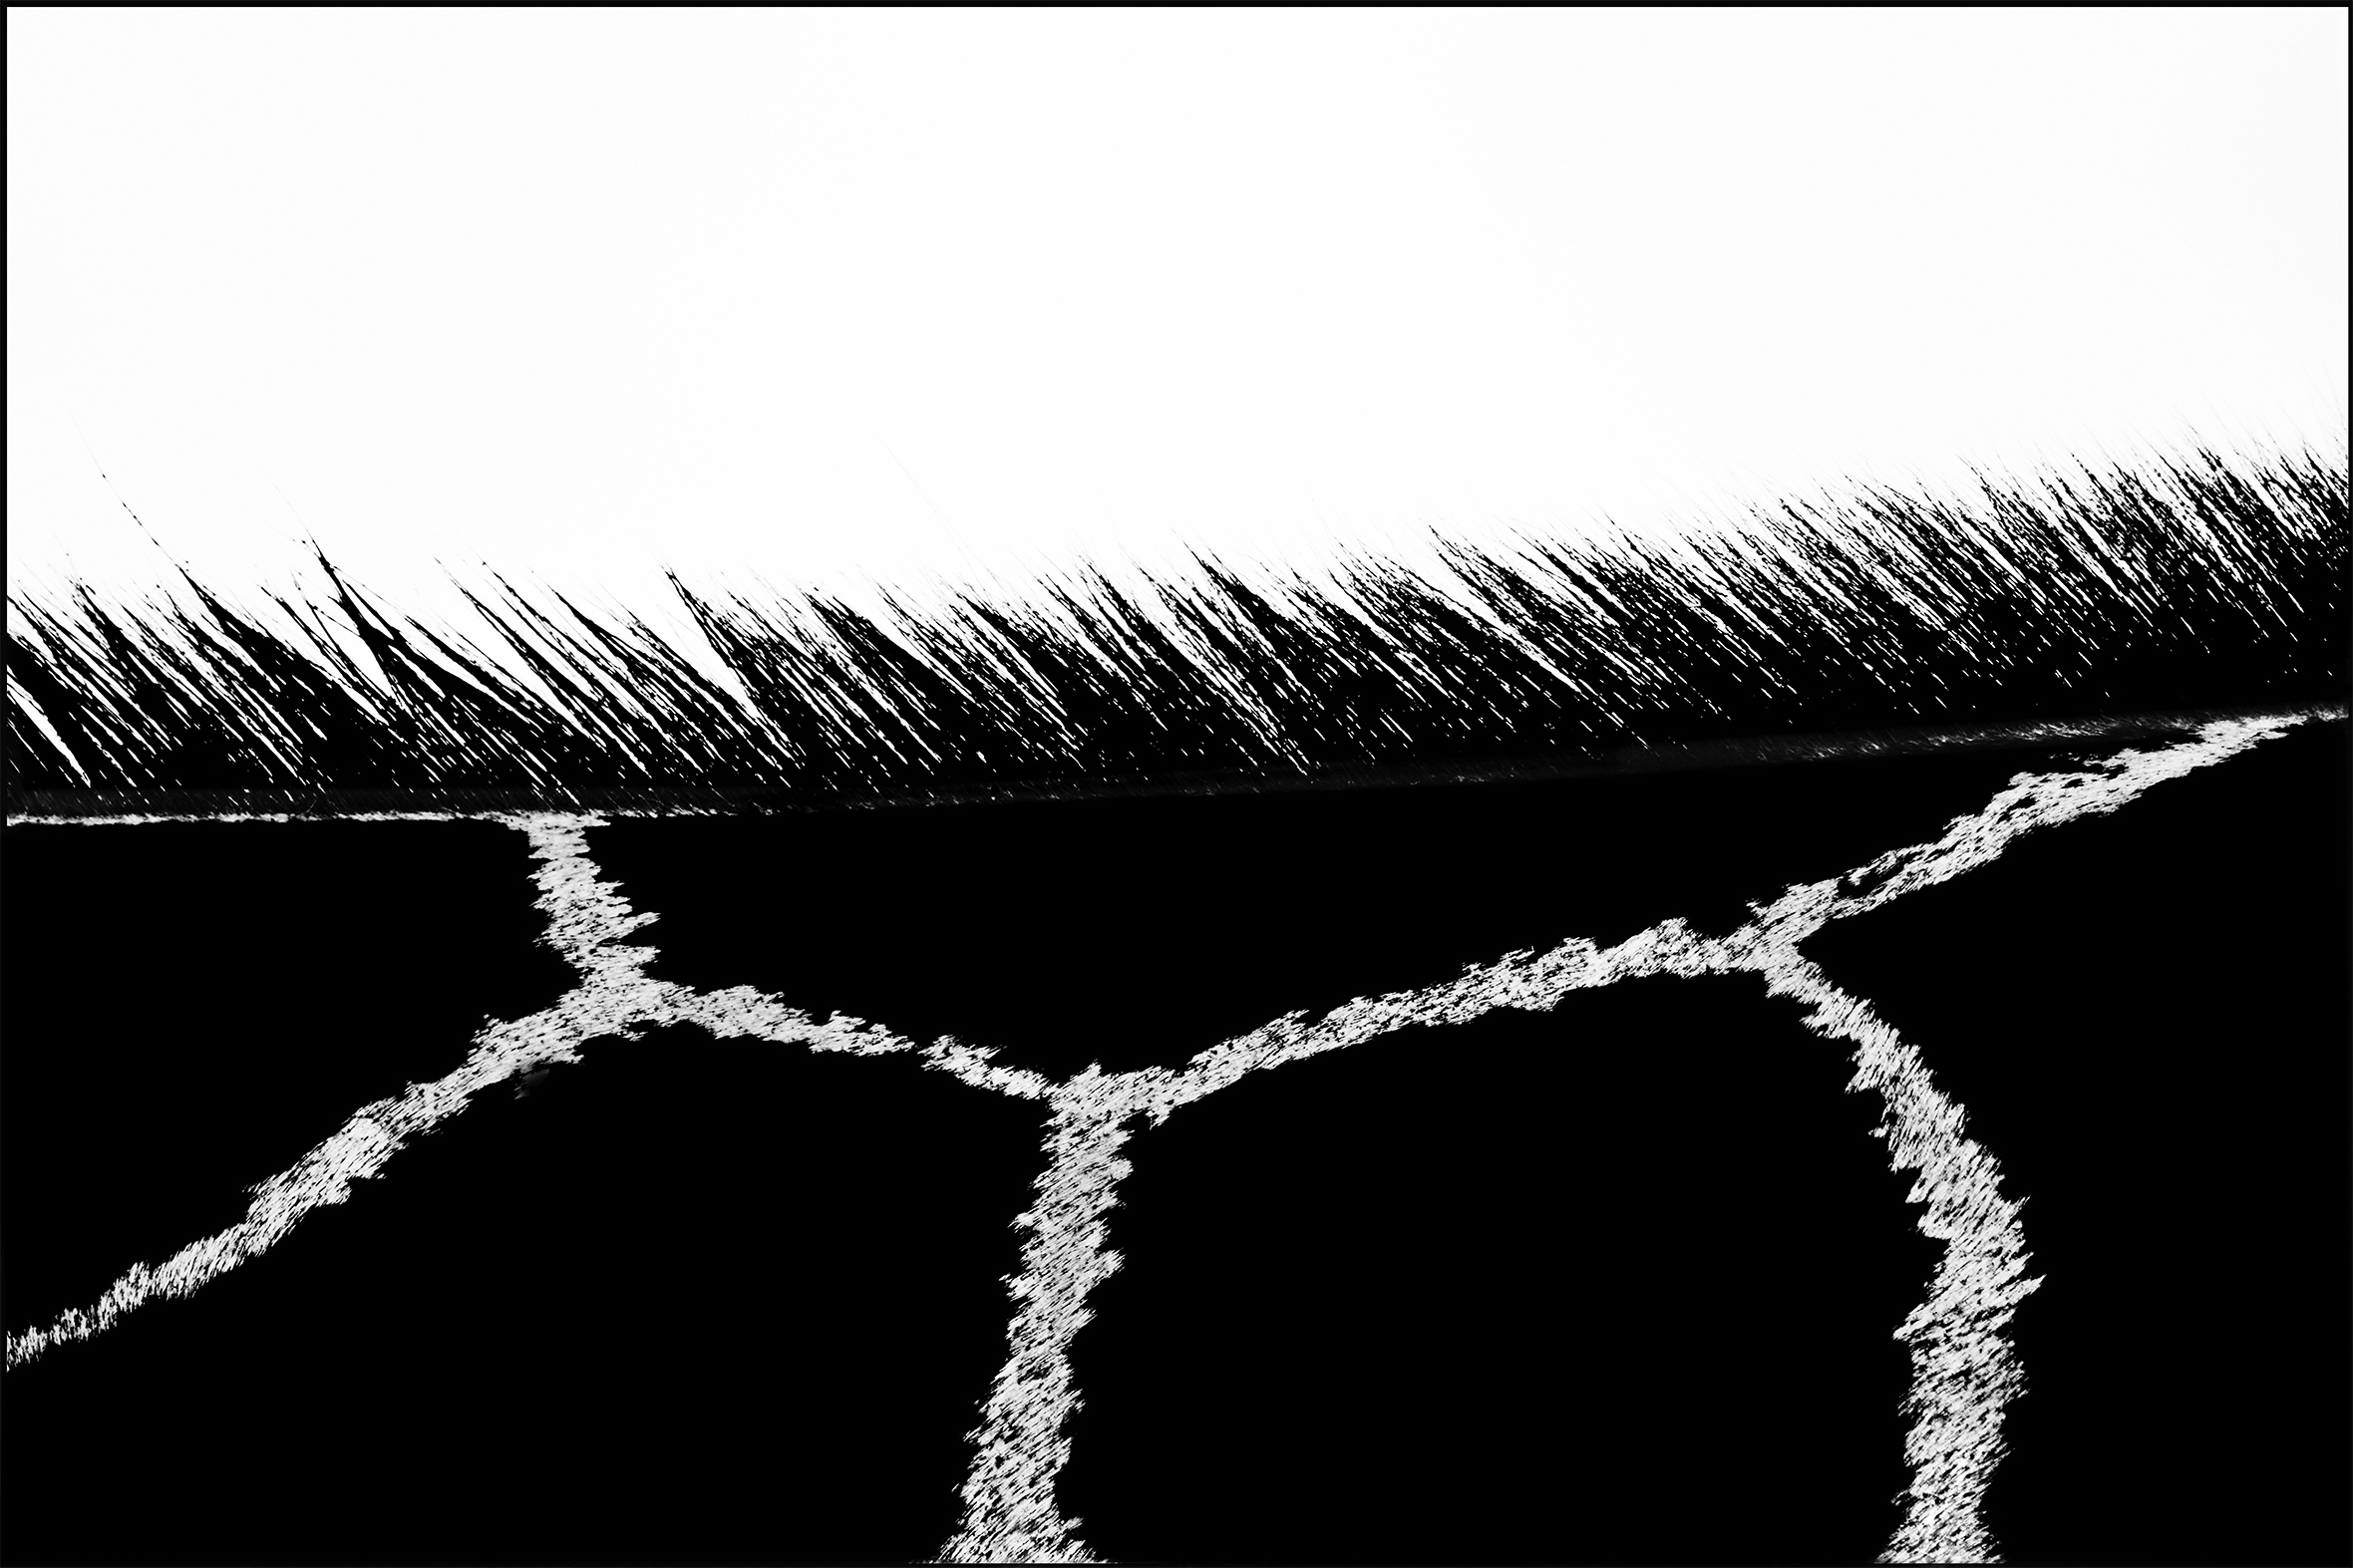 A close-up of the bristles of hair along a giraffe’s neck.